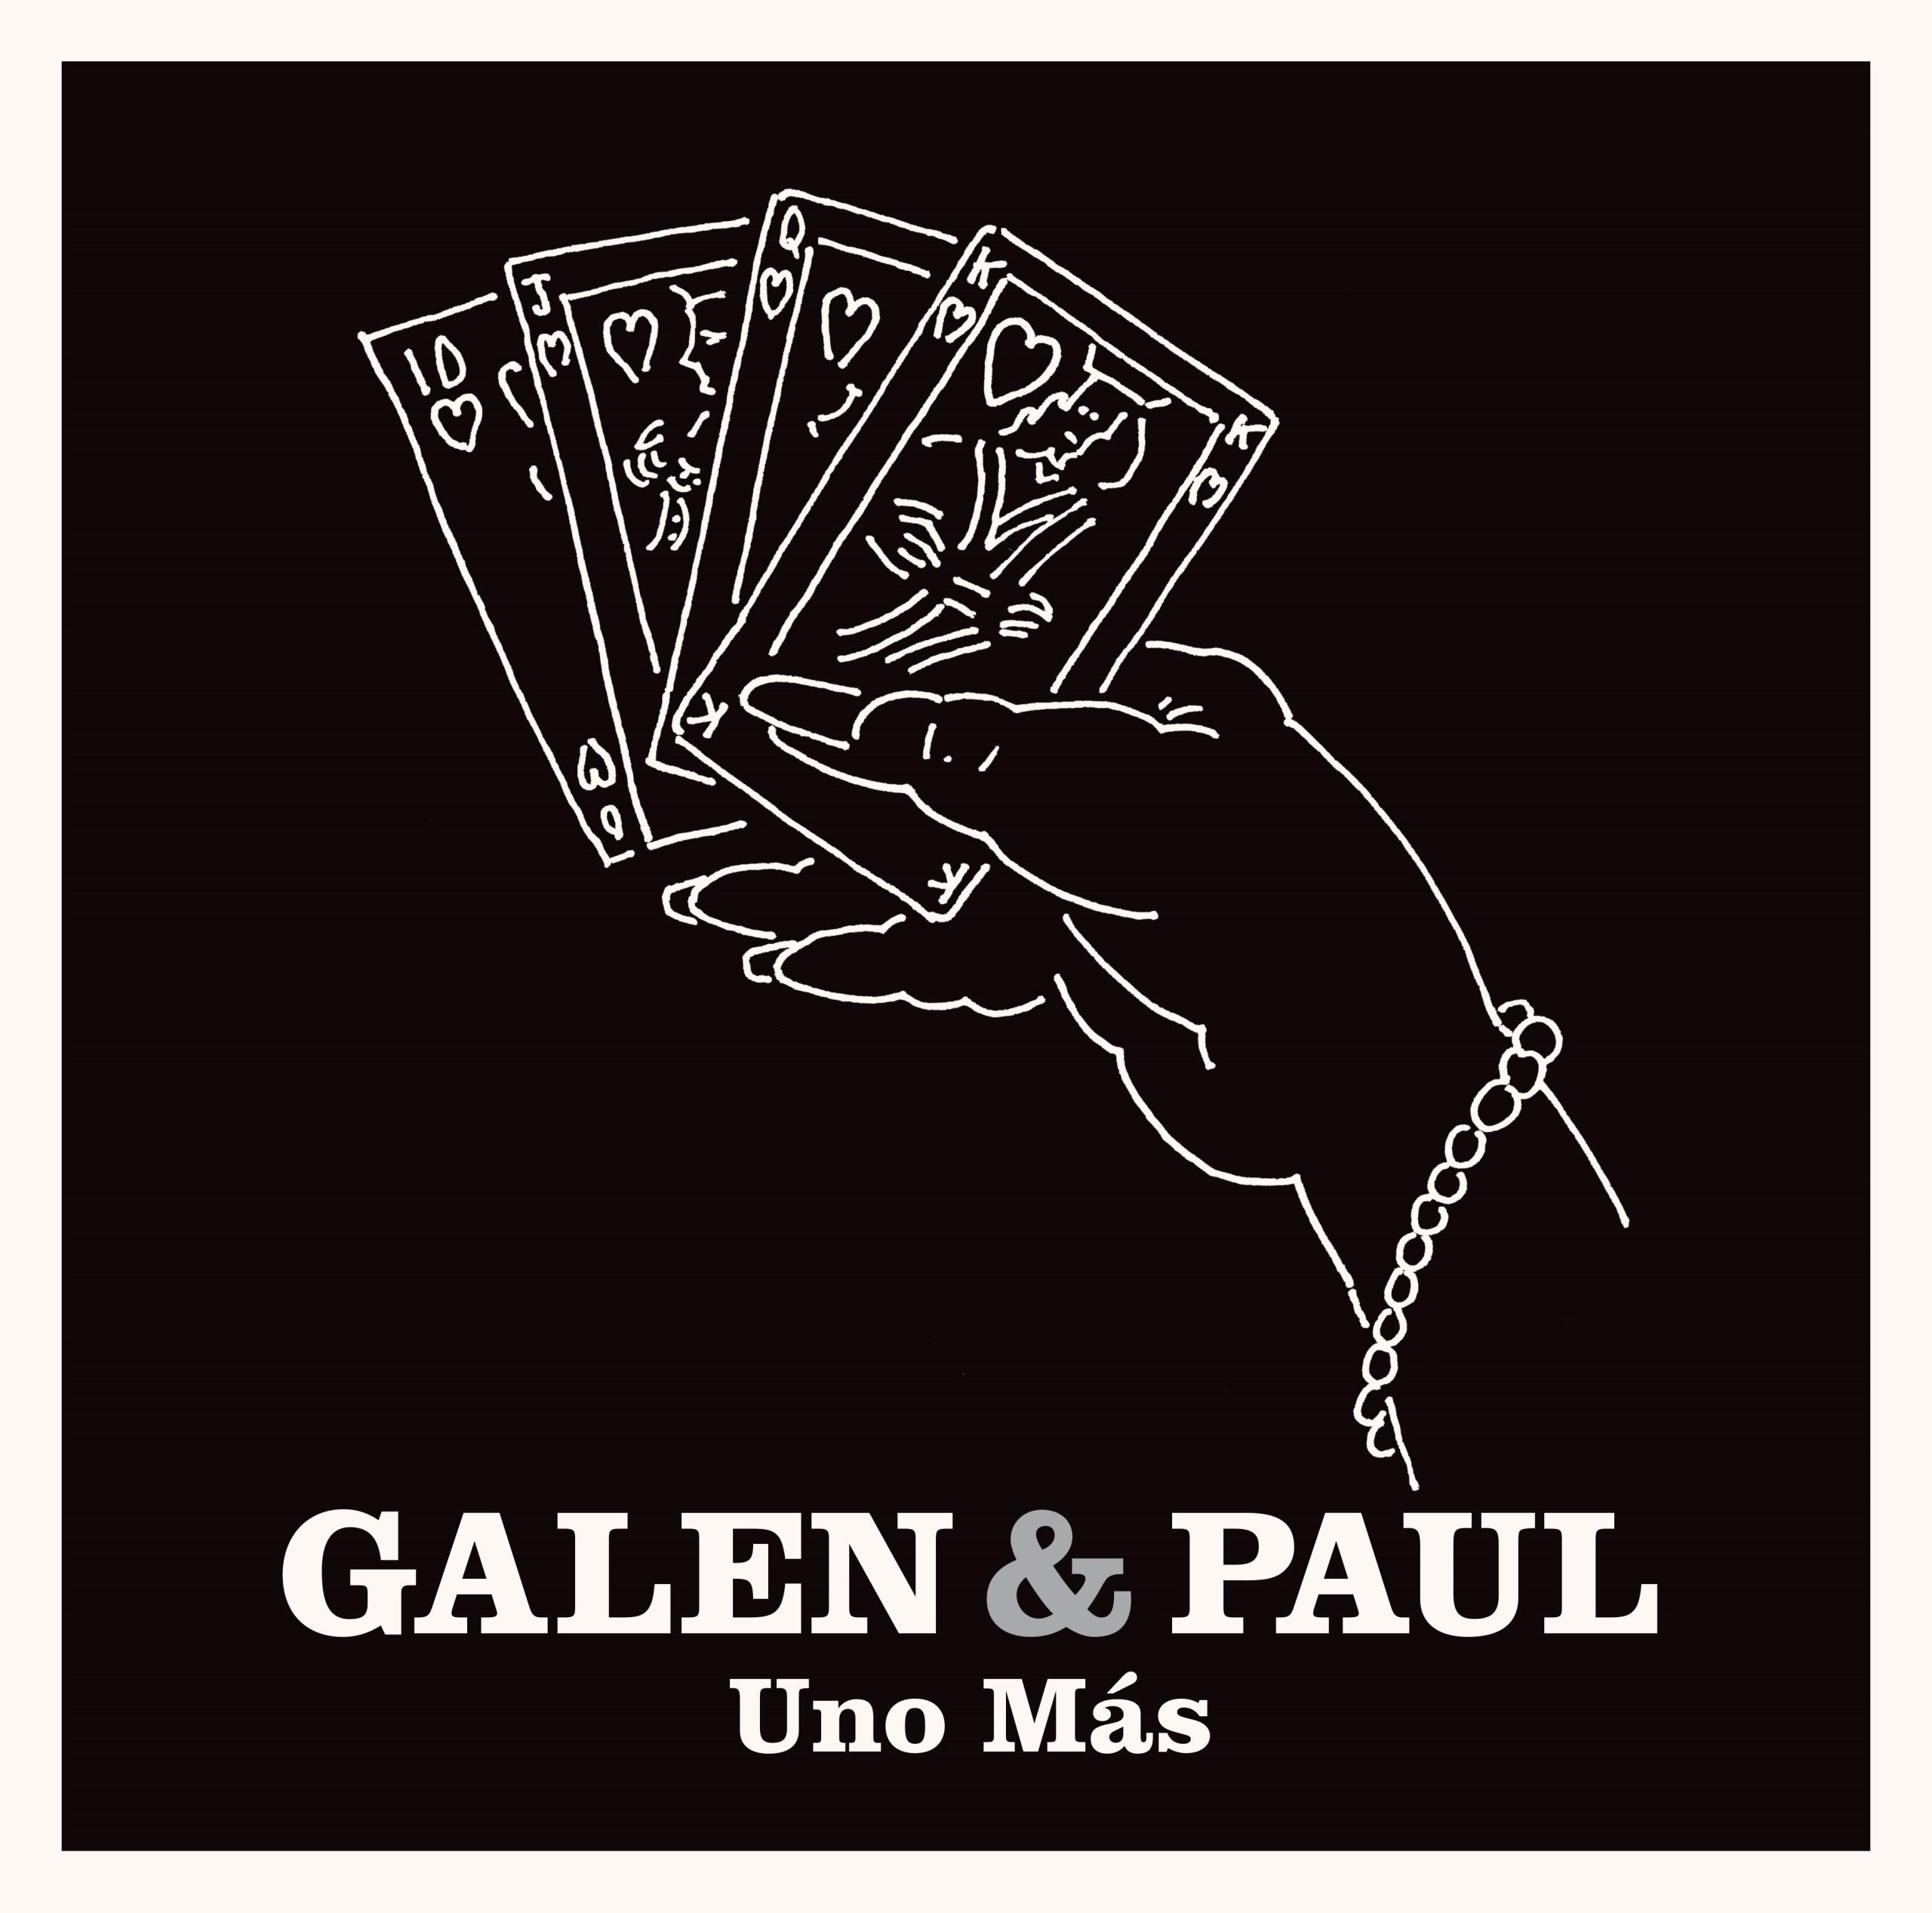 Galen & Paul - Uno Mas: Vinyl 12" EP + Signed Art Card [RSD24]